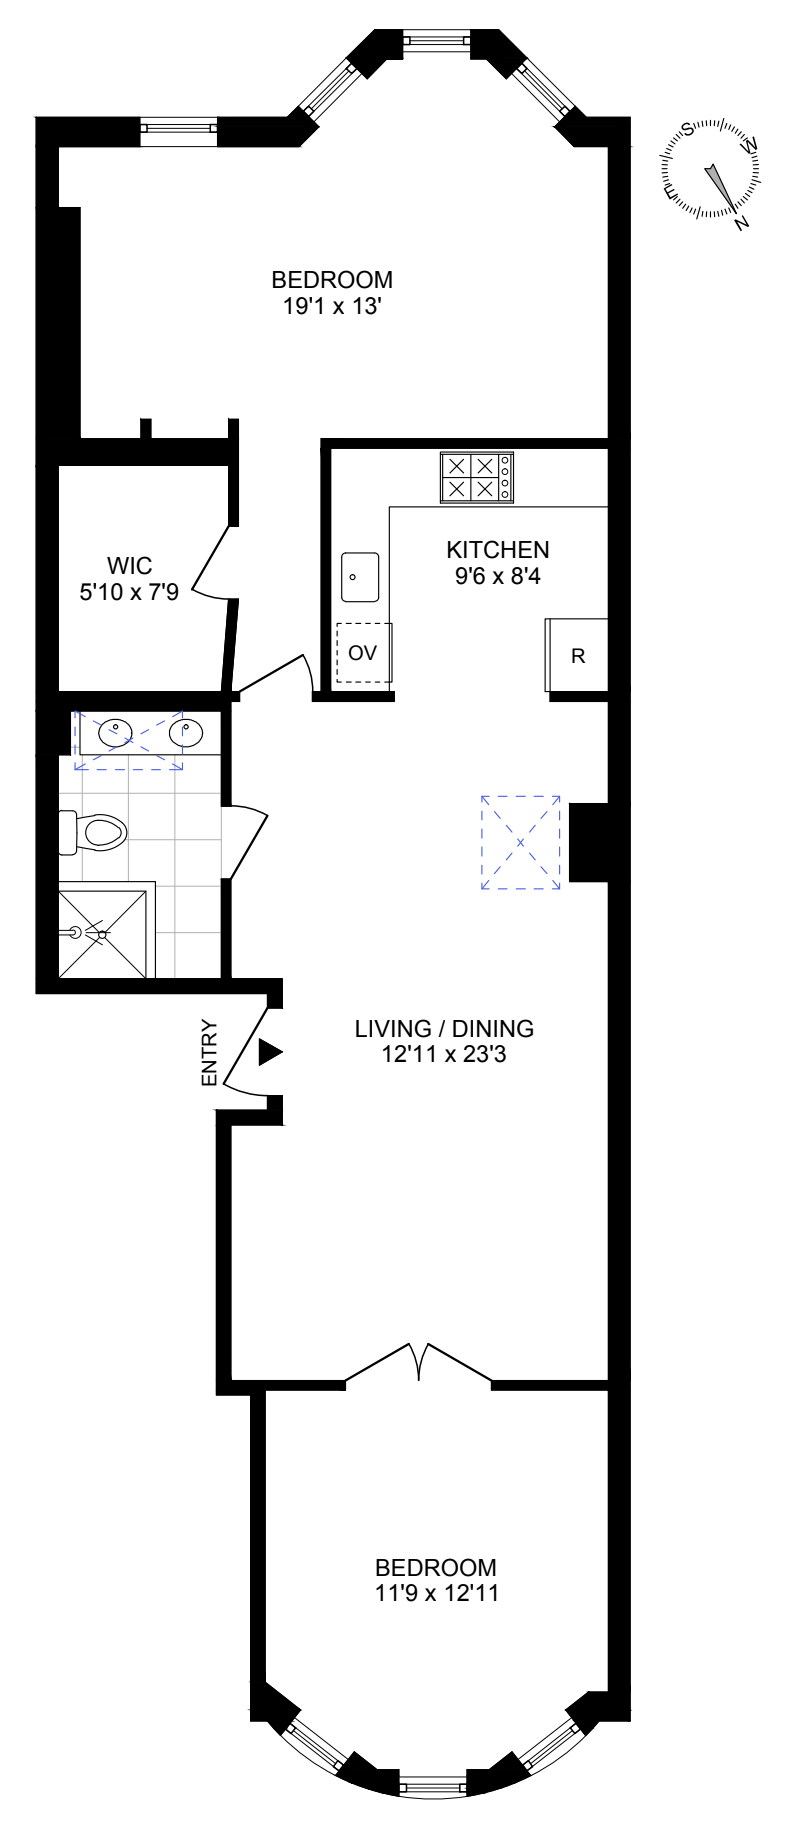 Floorplan for 430 Irving Avenue